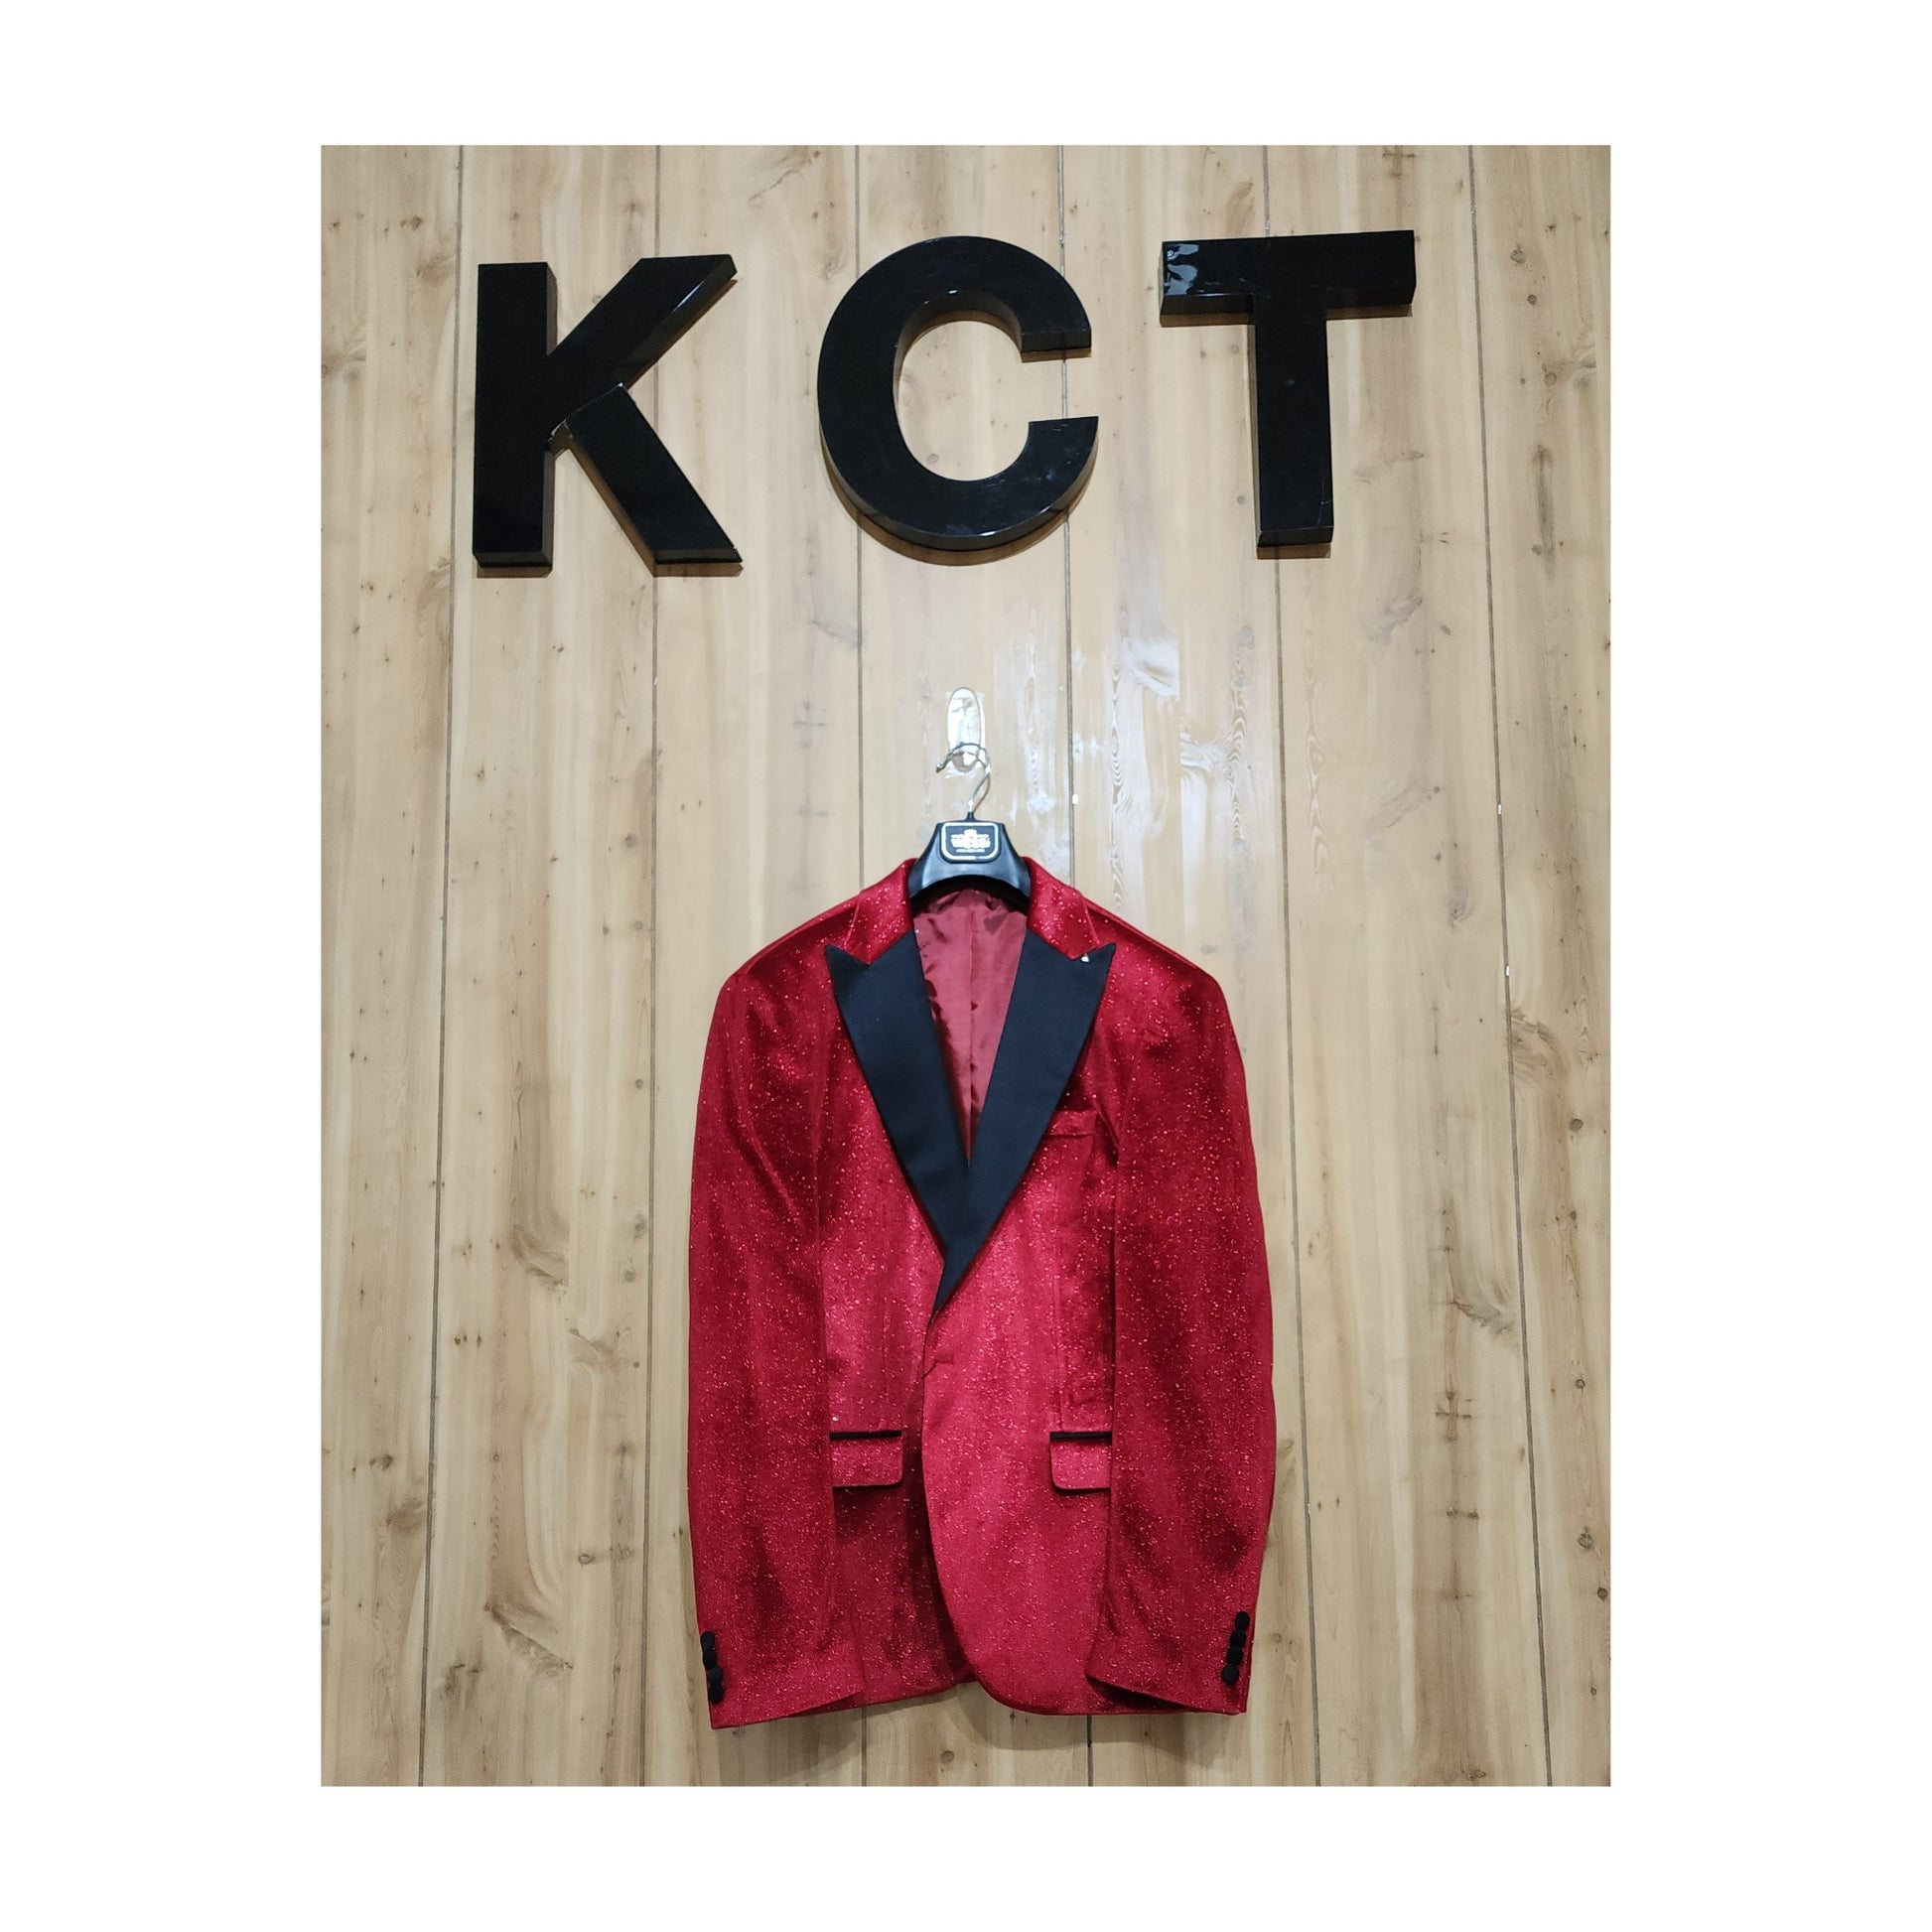 Man in KCT Menswear's red velvet sparkle blazer at a formal event